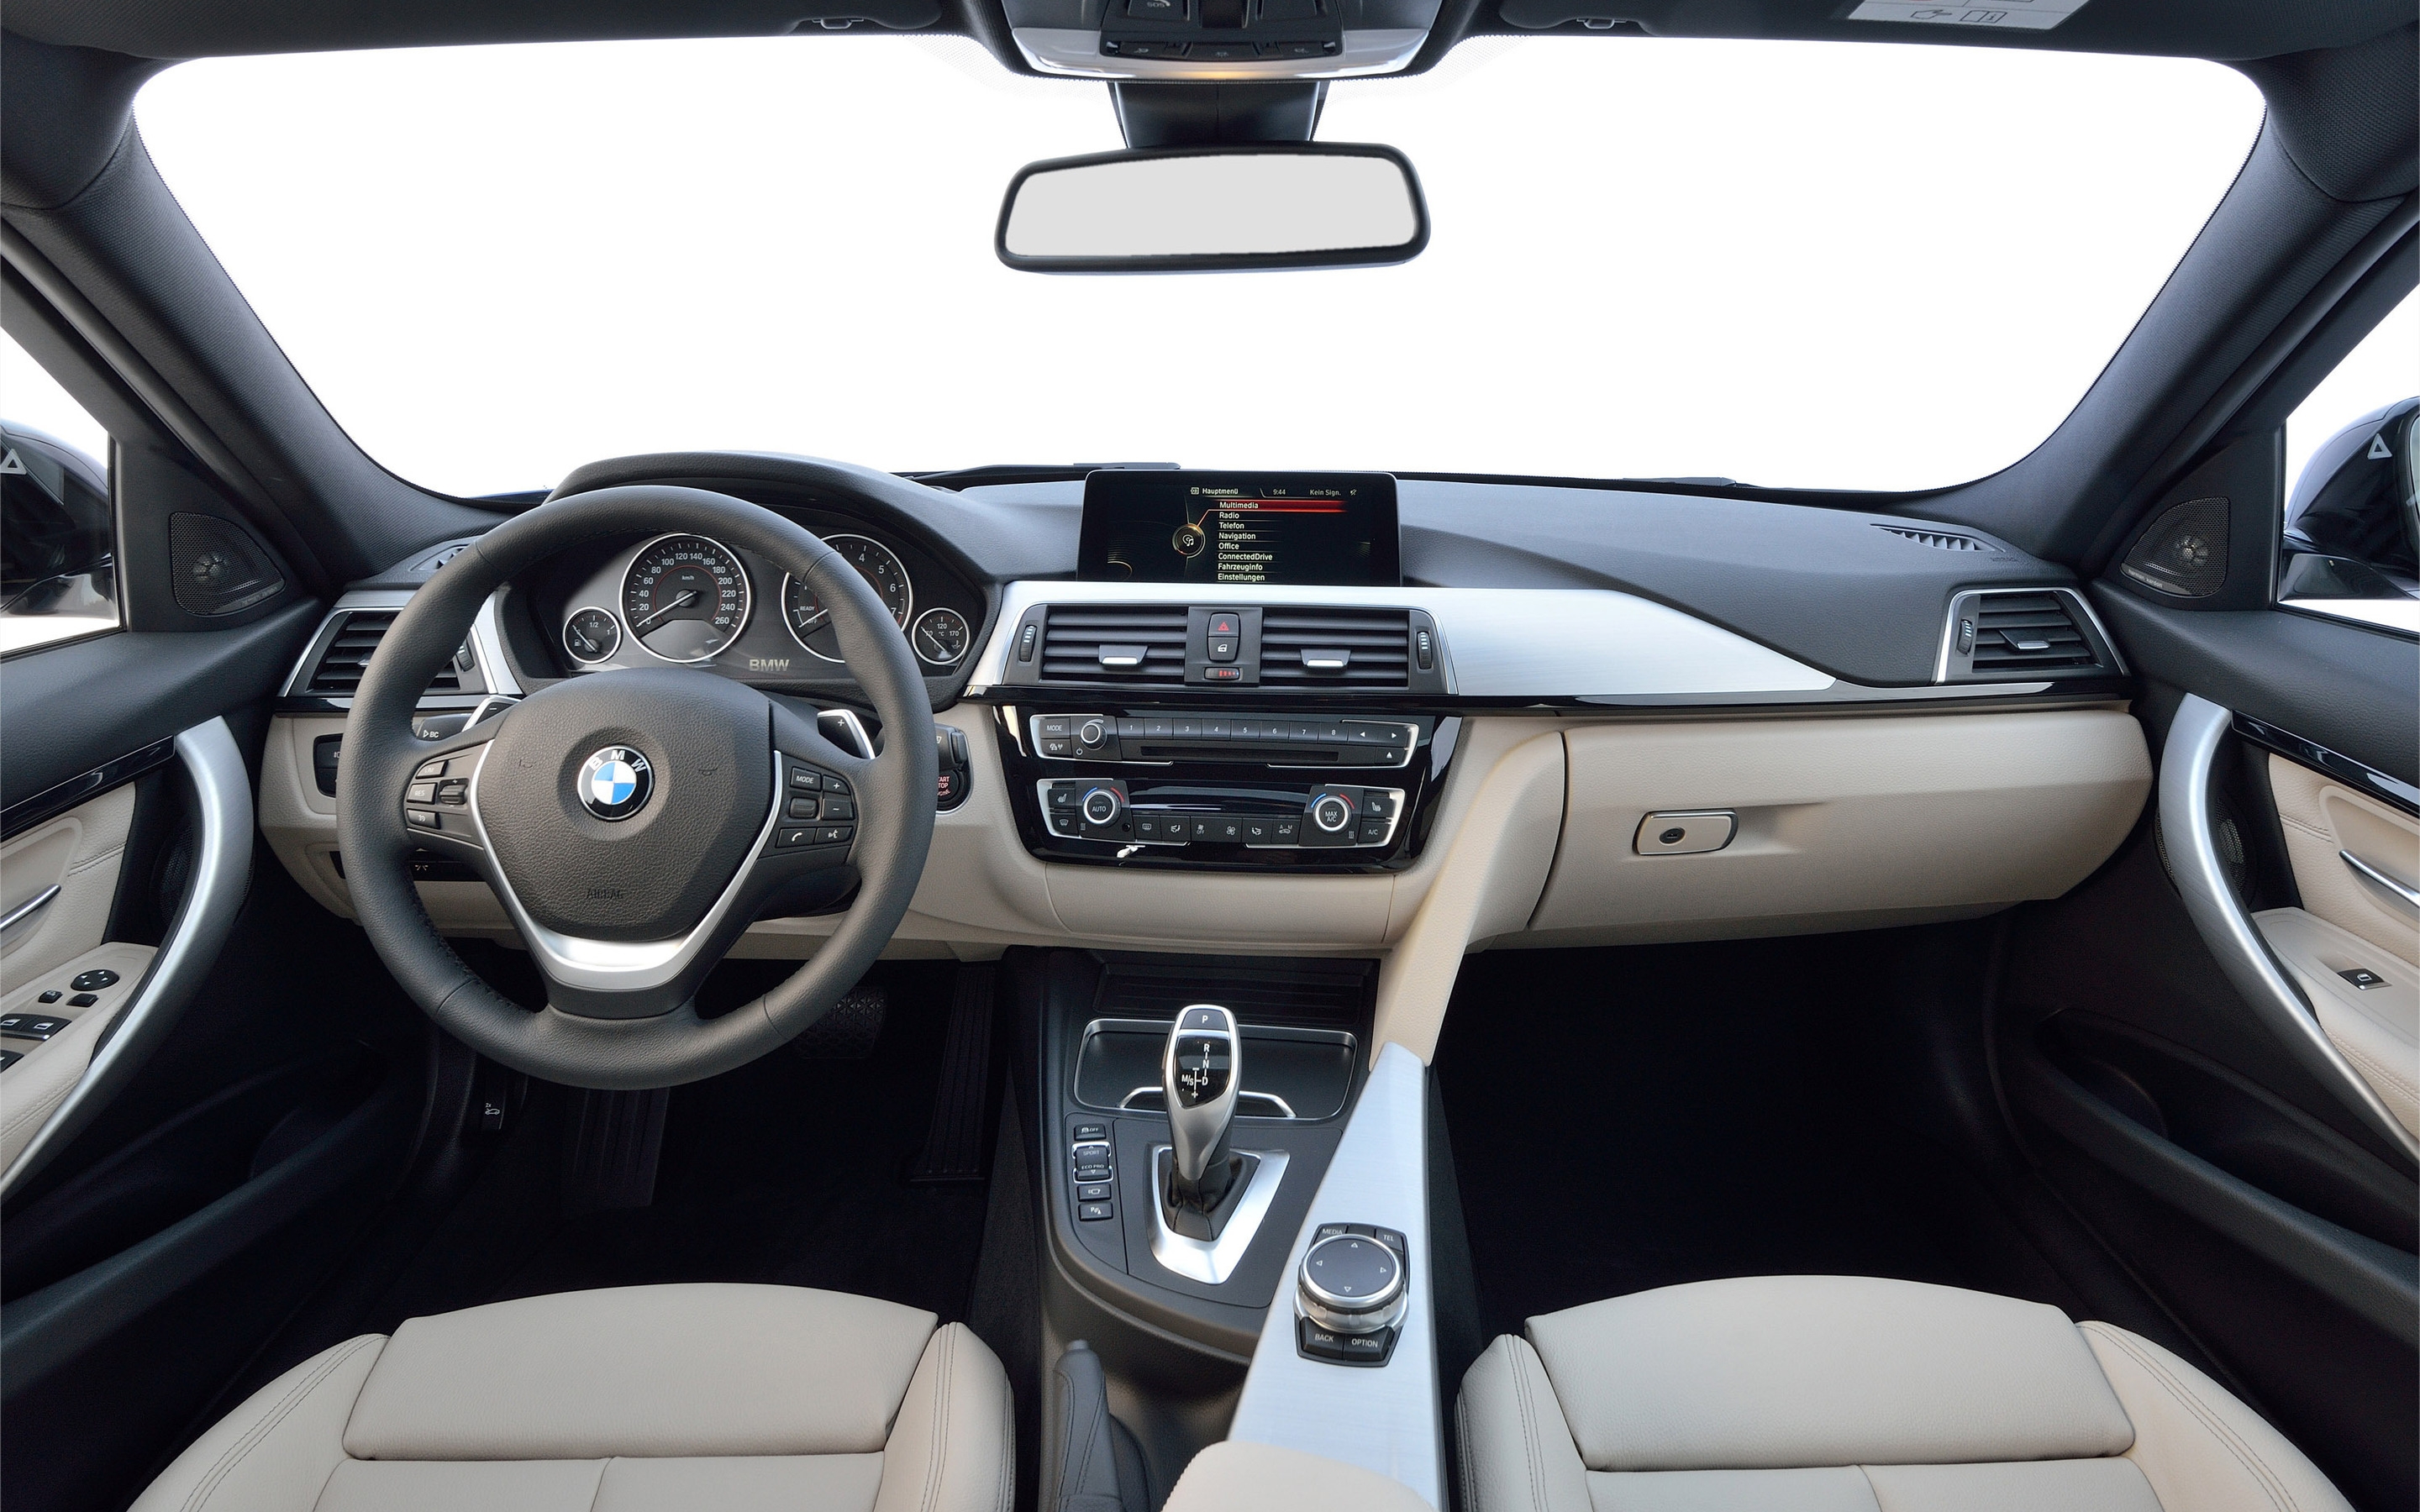 2016 BMW 3 Series Interior for 2880 x 1800 Retina Display resolution